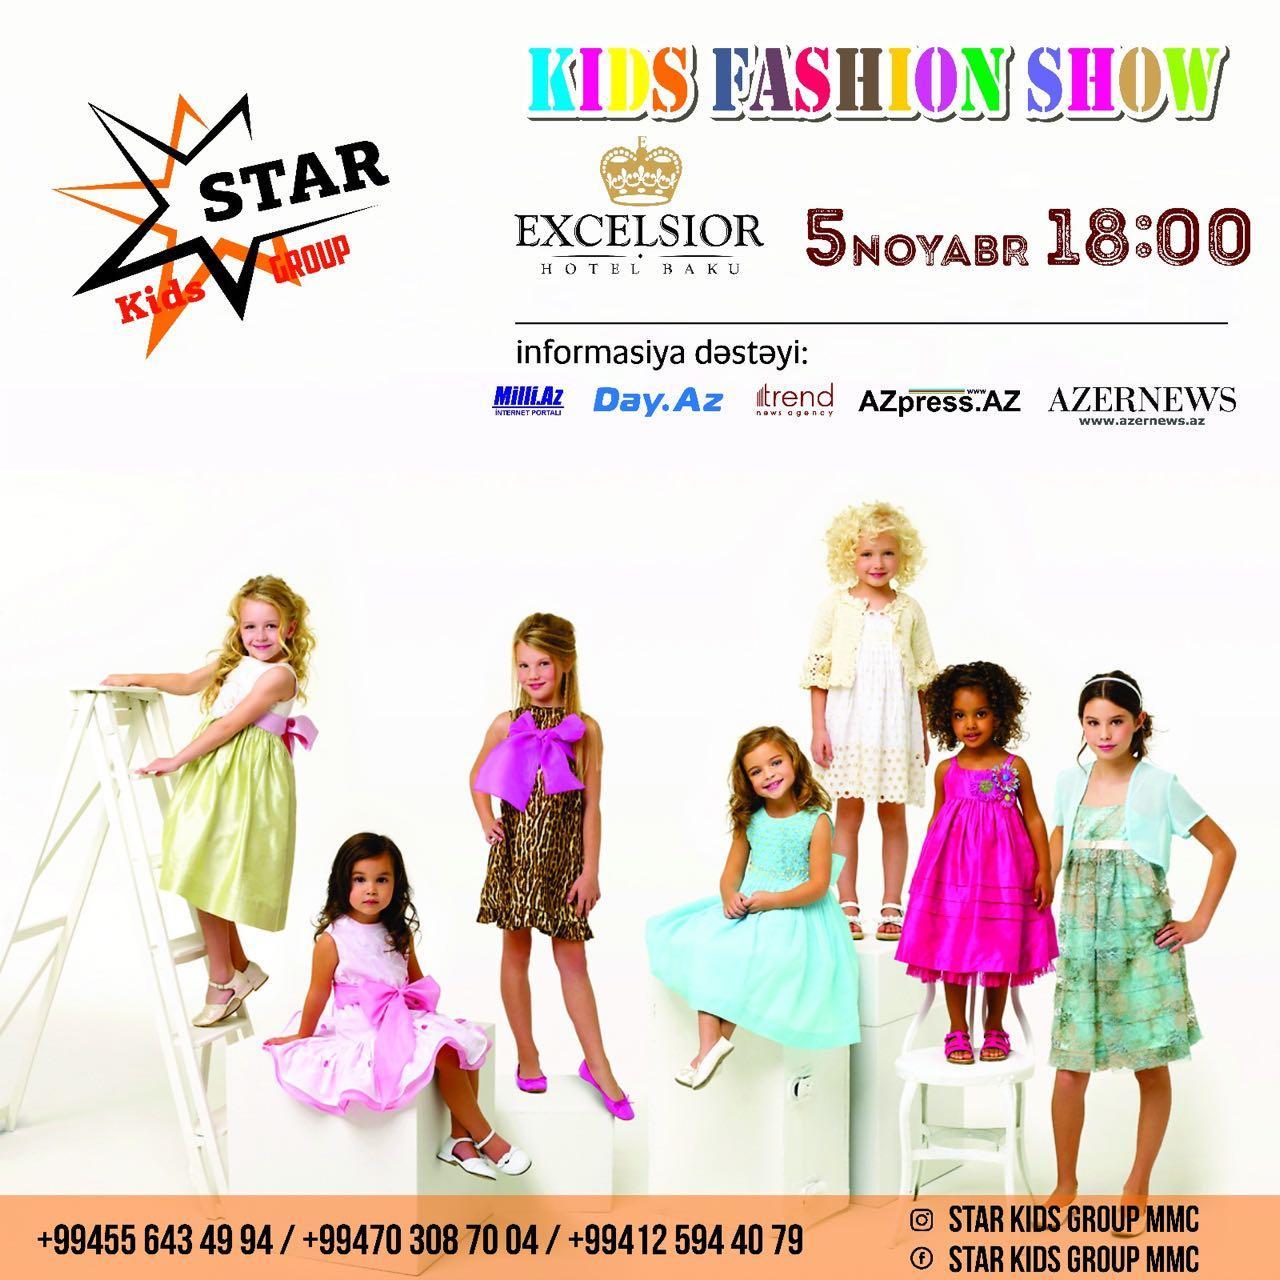 Don’t miss Kids Fashion Show! [PHOTO]